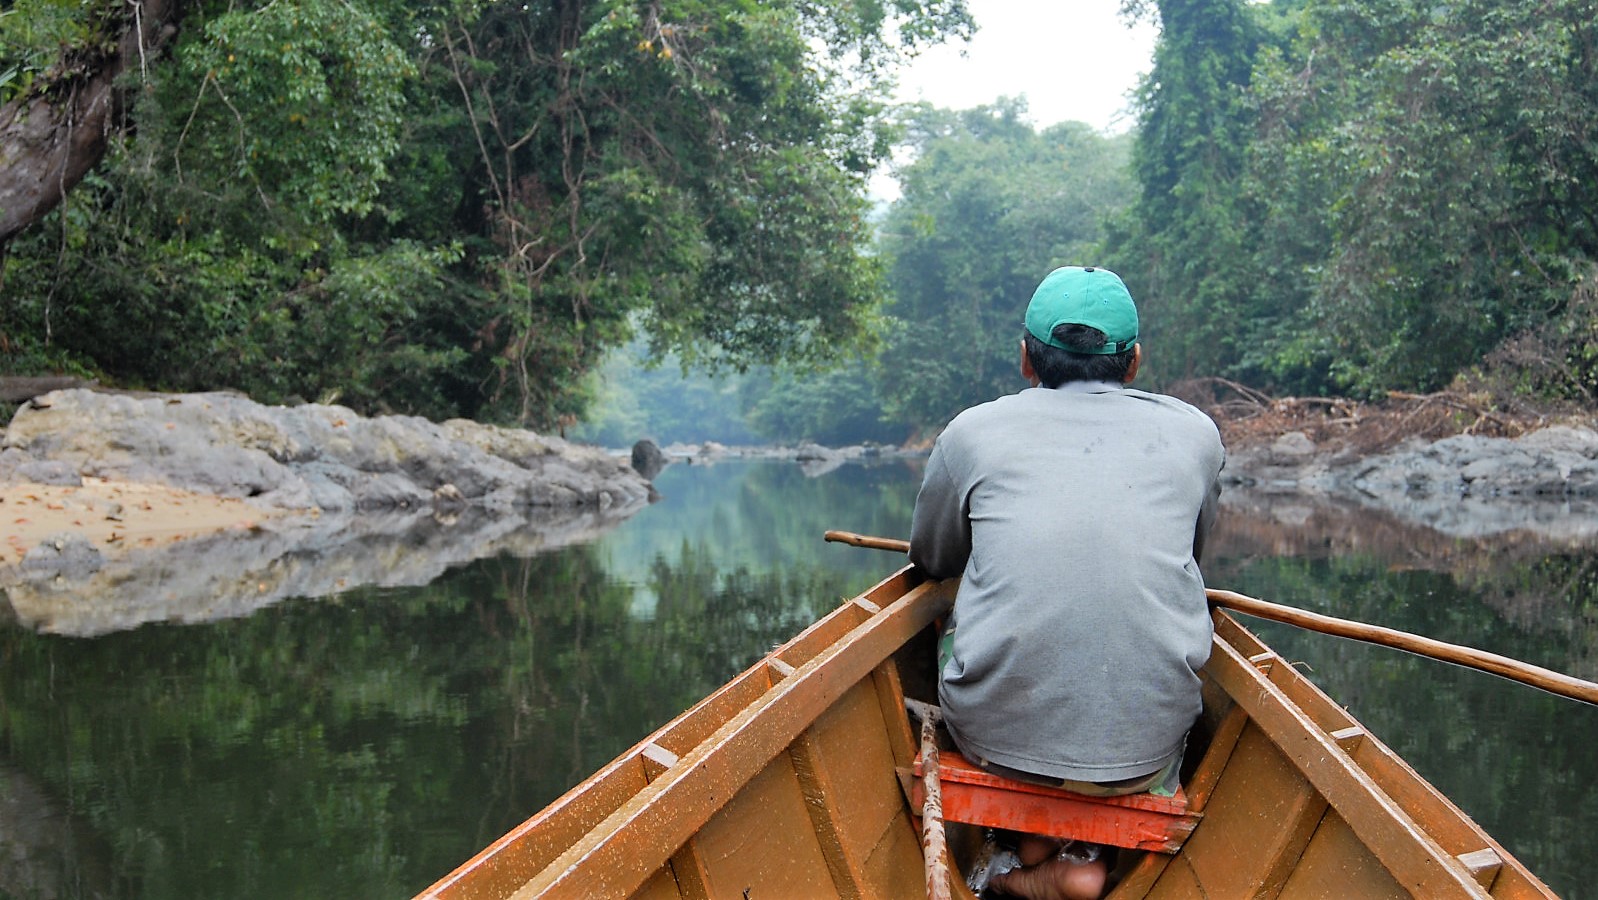 mahakam river, cruise, tour trek, guide, kalimantan, borneo, indonesia, dayak, culture, jungle, wildlife, safari, rain forest, forest, longhouse, journey, expedition